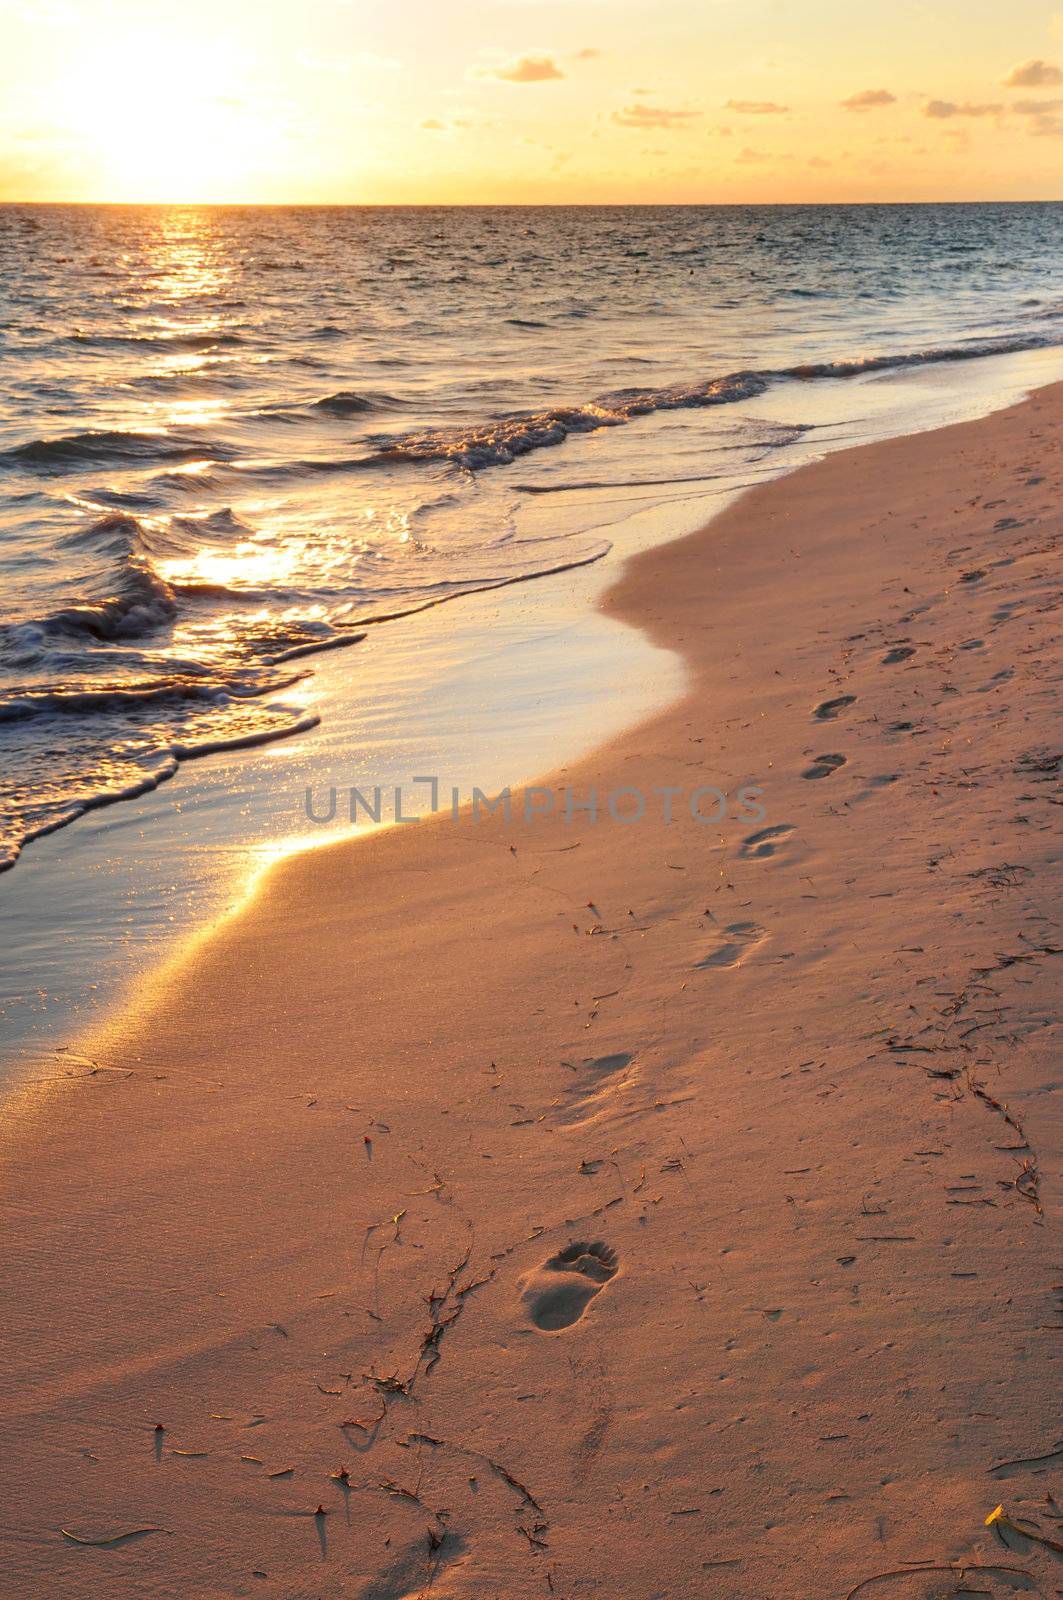 Footprints on sandy beach at sunrise by elenathewise